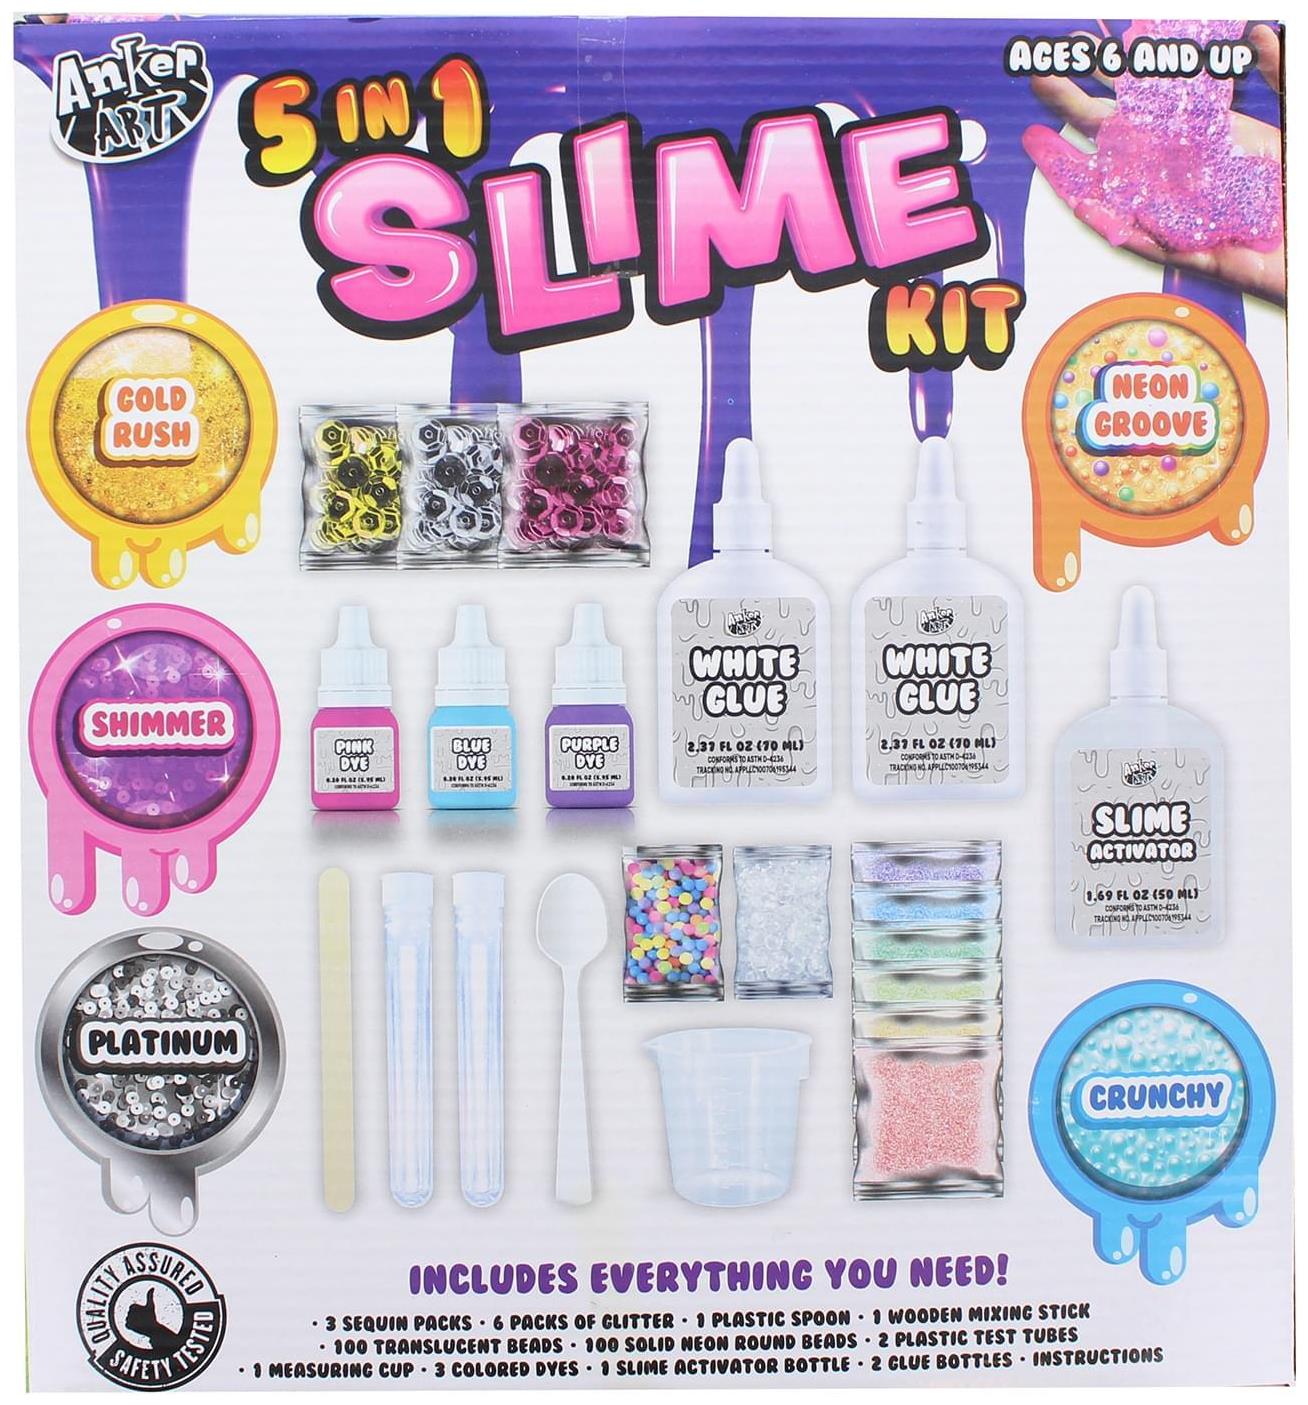 Slimygloop Mix EMS Cotton Candy DIY Slime Kit